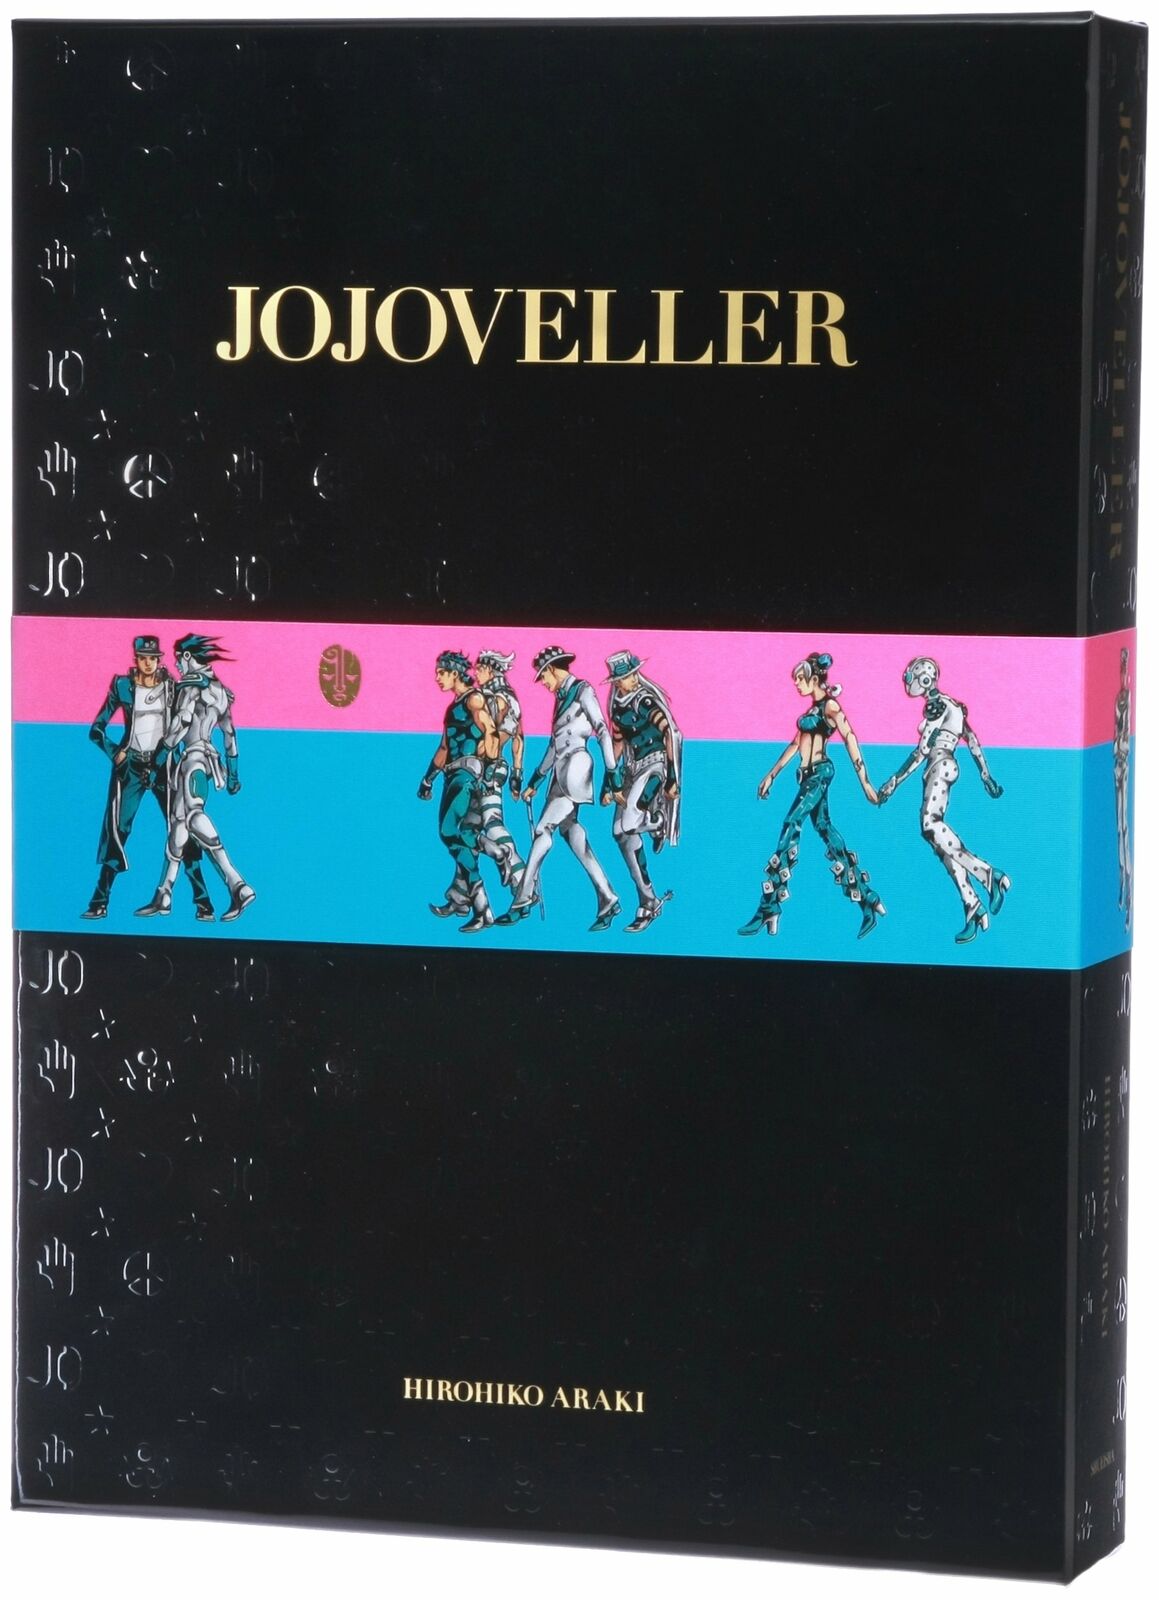 [USED]JOJOVELLER Complete Limited Edition (Multimedia) (English) Comic